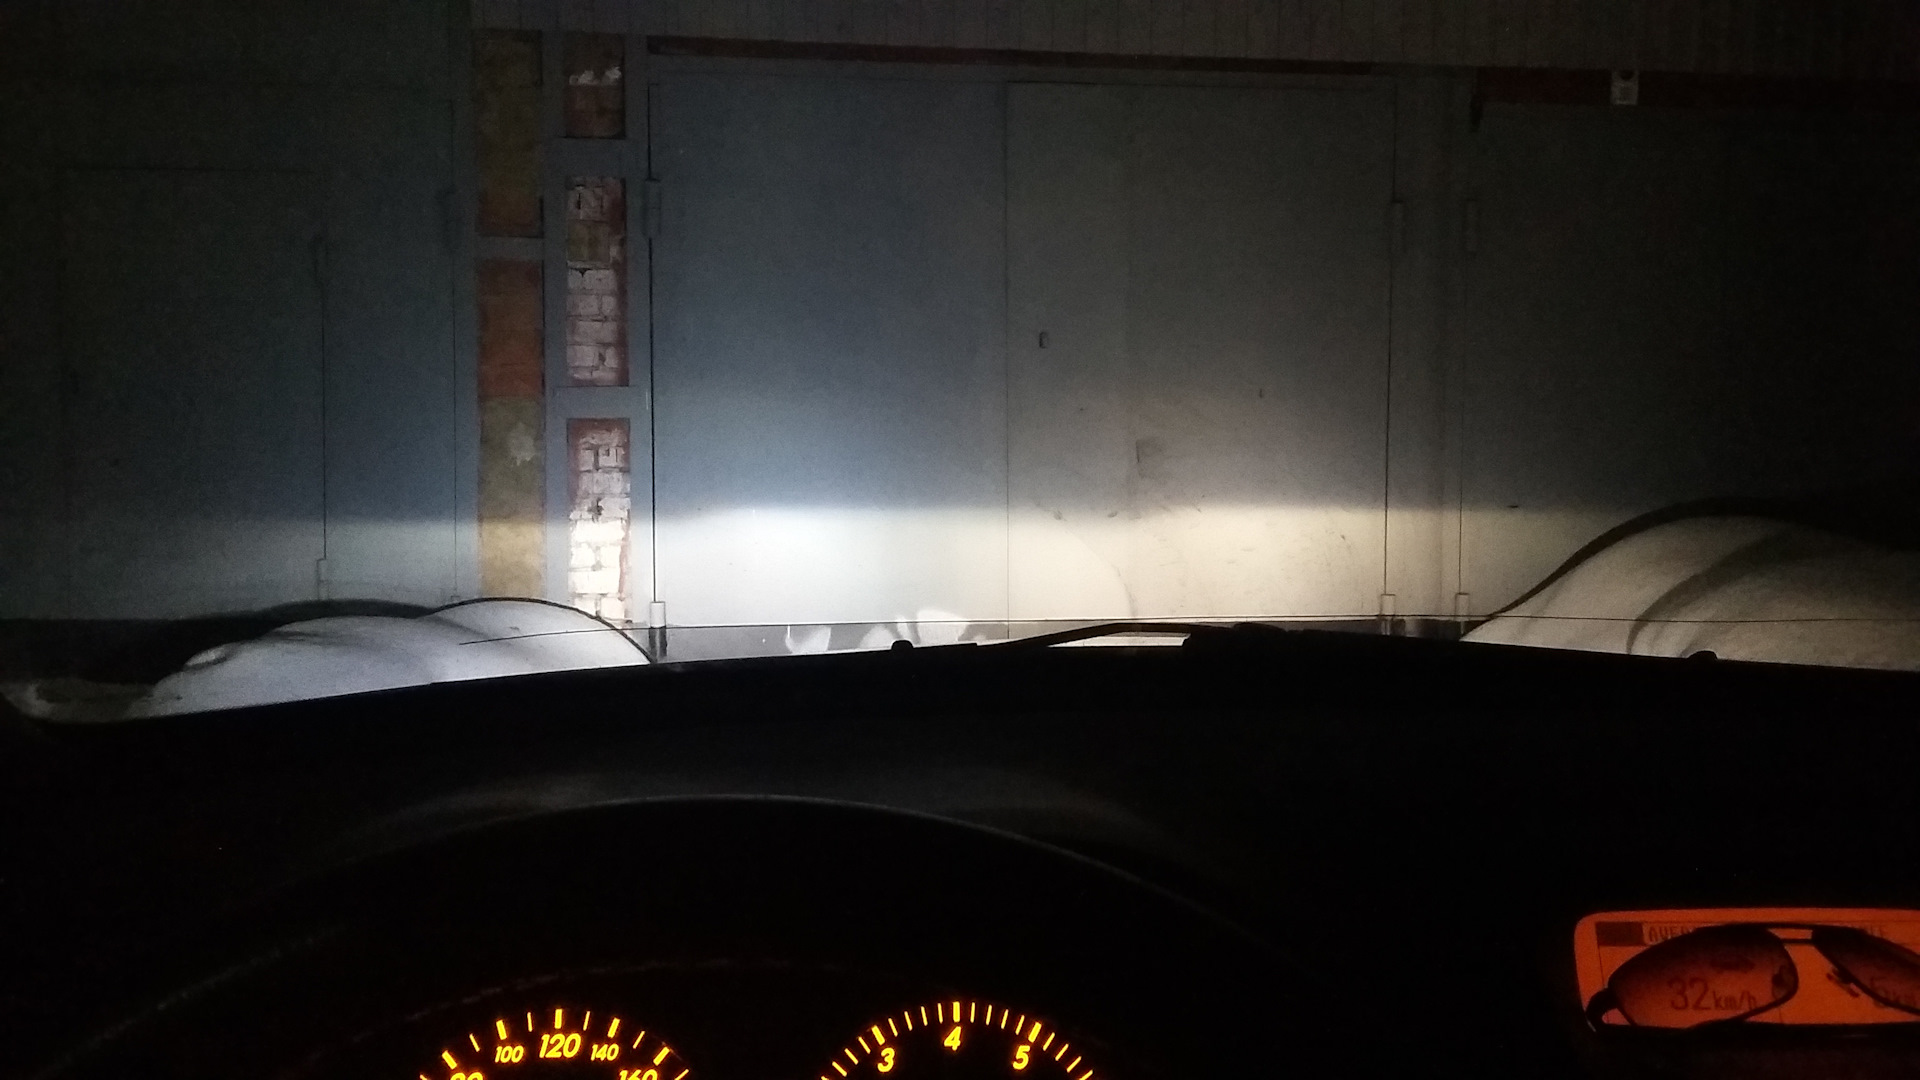 Дальний свет авенсис. F5c Дальний свет драйв 2 Тойота. Фон свет фар Avensis. Мало света не качественное фото. На фоне склада Авенсис дождь.